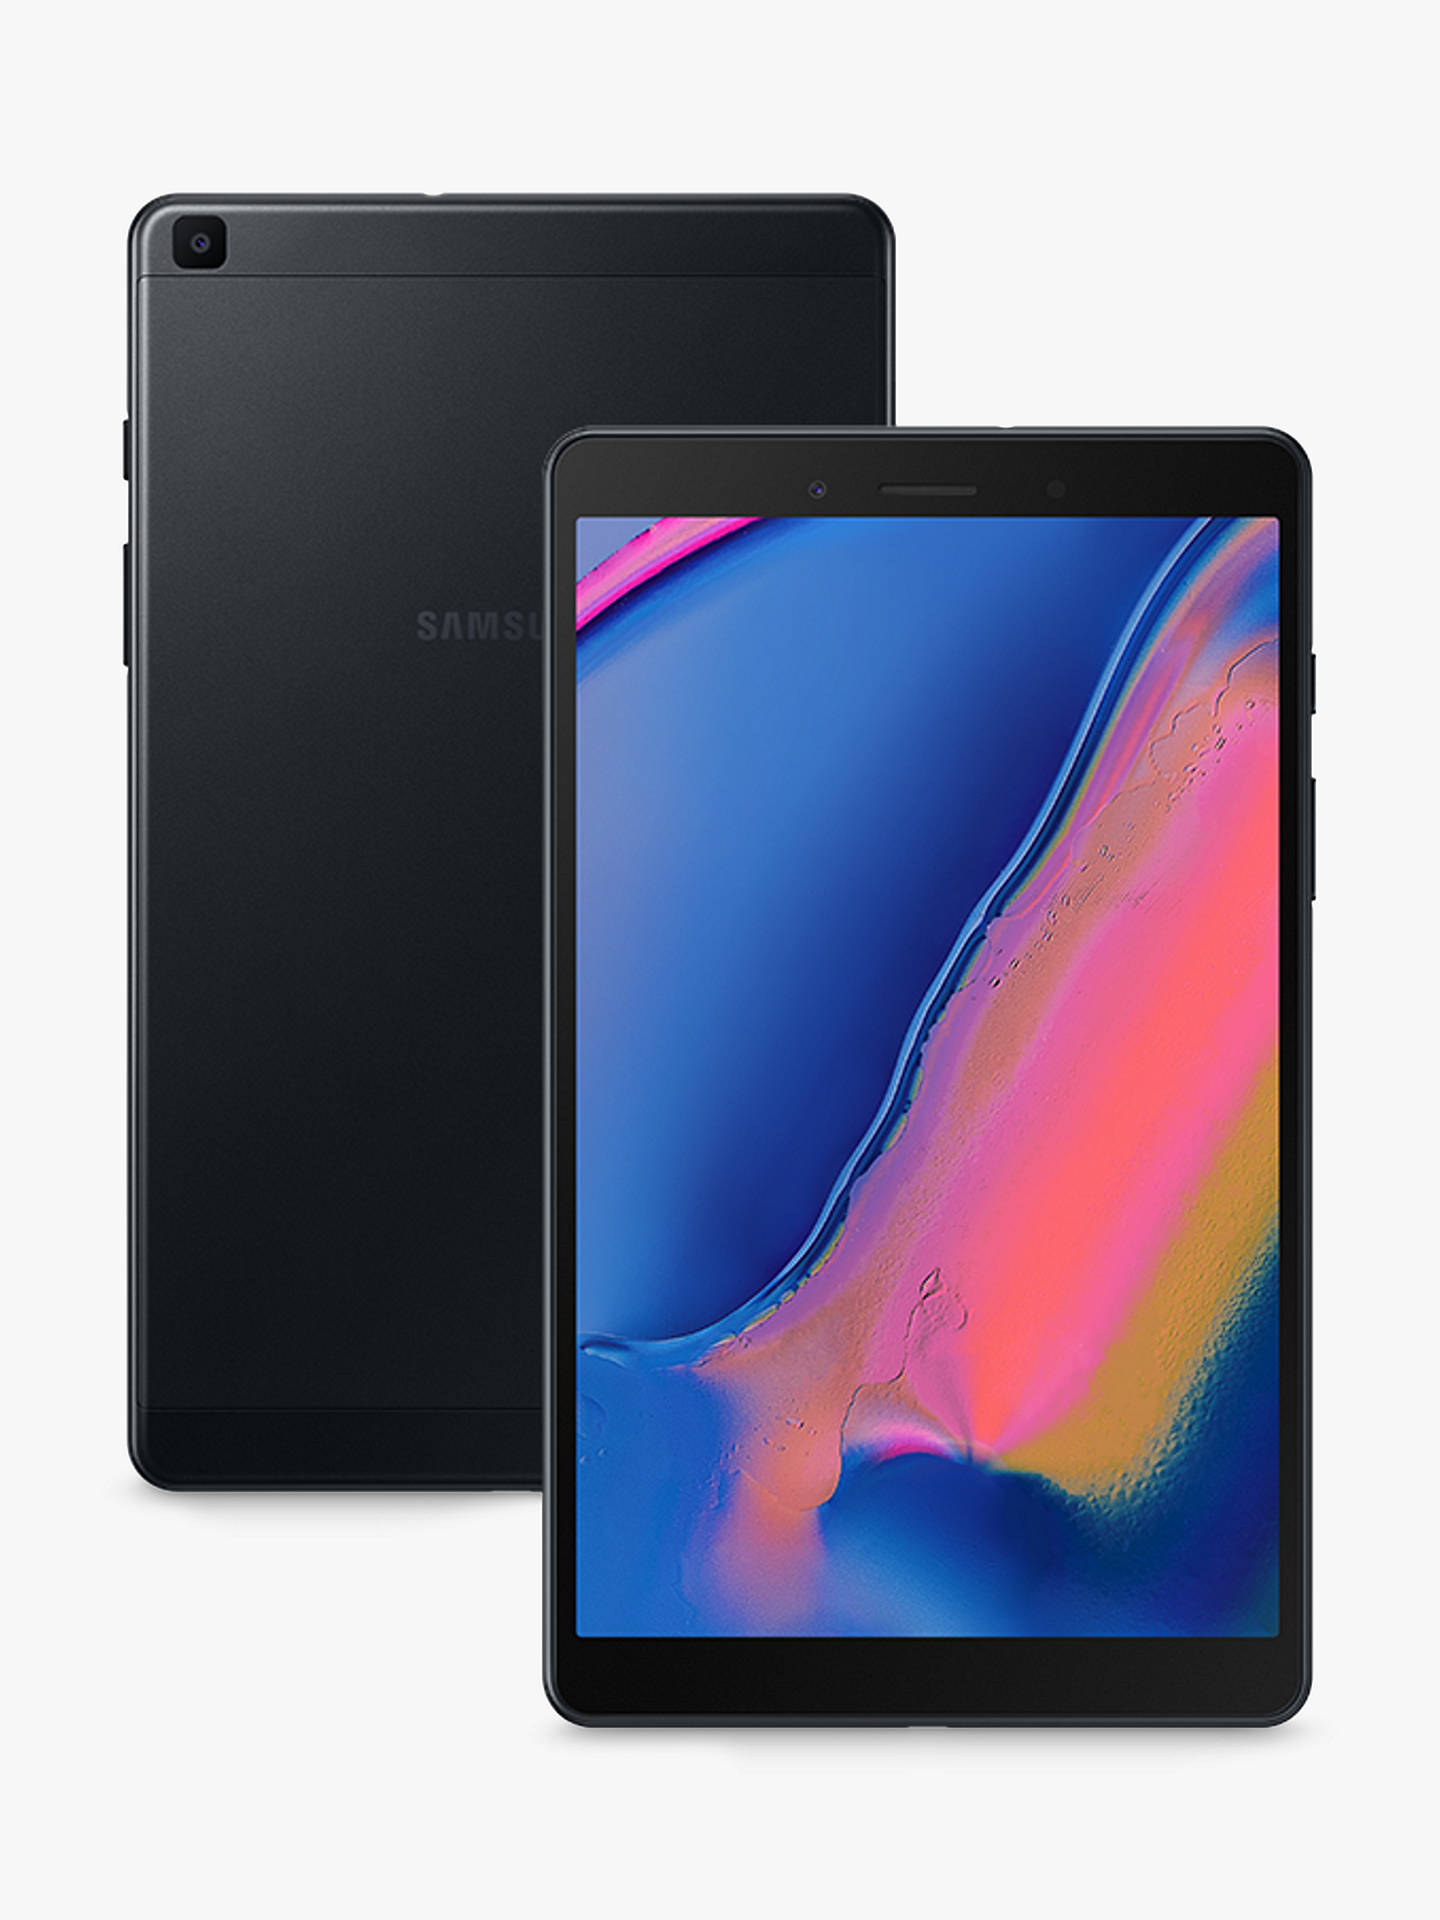 Samsung Galaxy Tab A8 (2019) 8" Tablet, Android, 2GB RAM, 32GB, WiFi